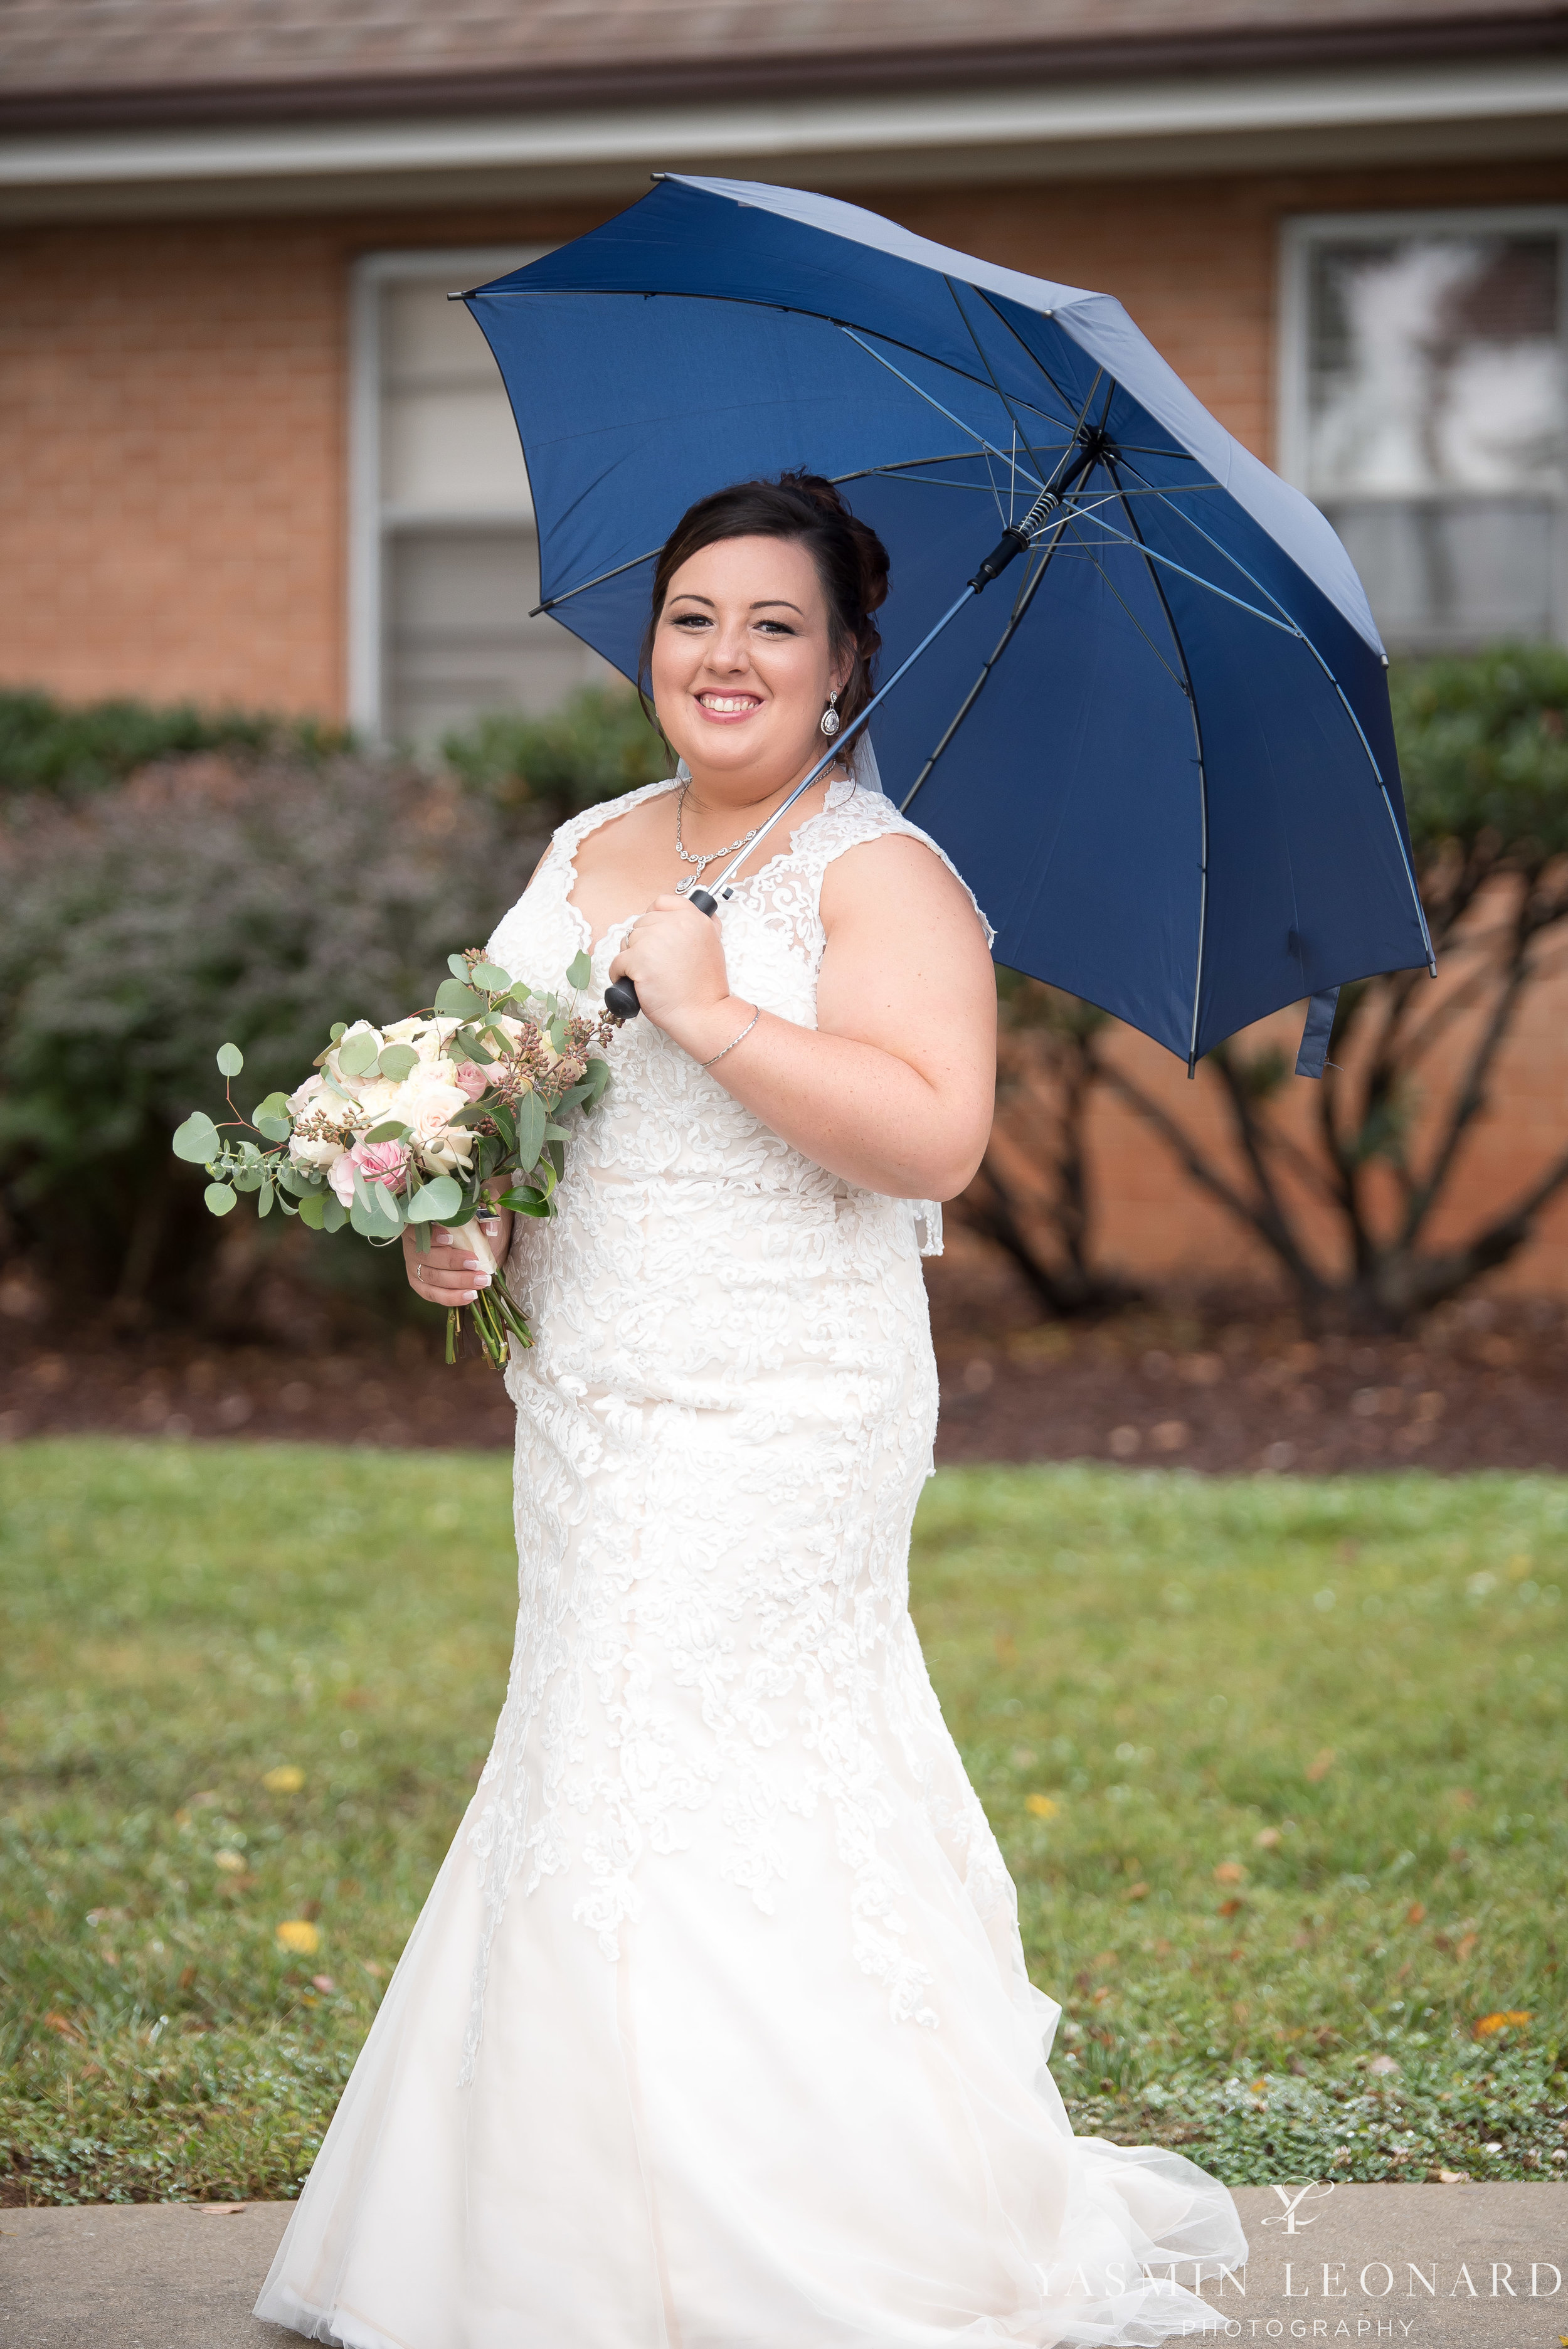 Wesleyan Christian Academy Wedding - High Point Wedding - NC Wedding Photographer - Yasmin Leonard Photography-12.jpg